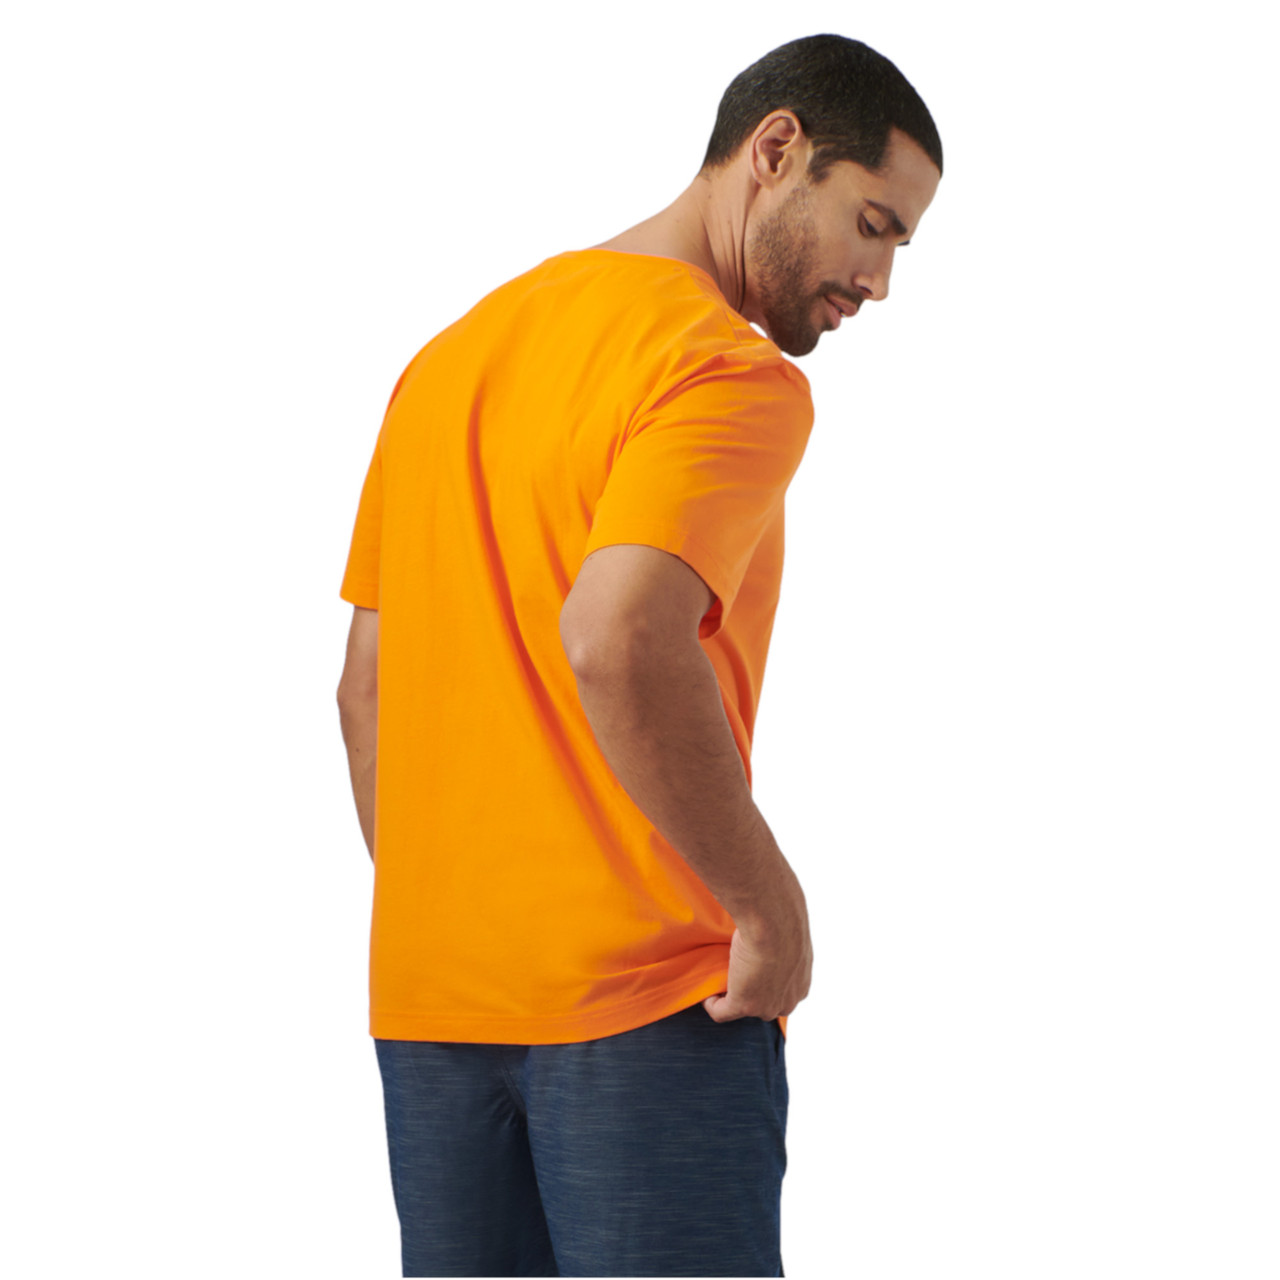 Sea-Doo New OEM, Men's 2XL Branded Cotton Signature T-Shirt, 4546631412